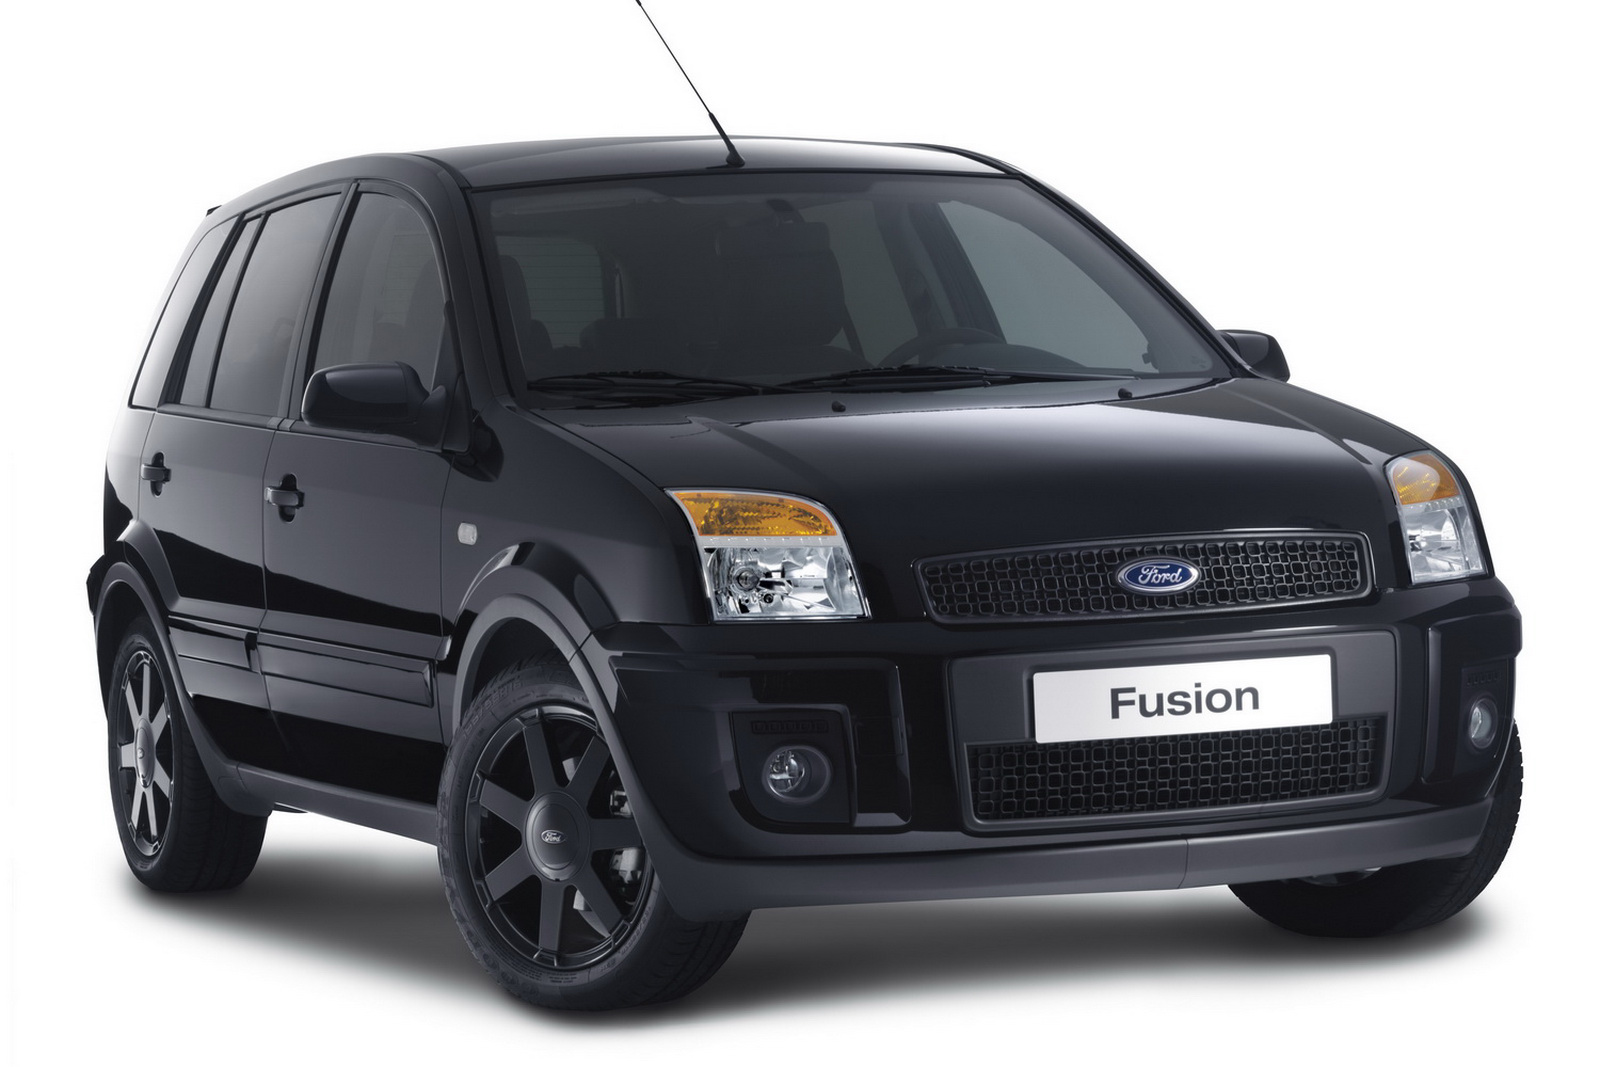 Ford Fiesta Black Magic image #10